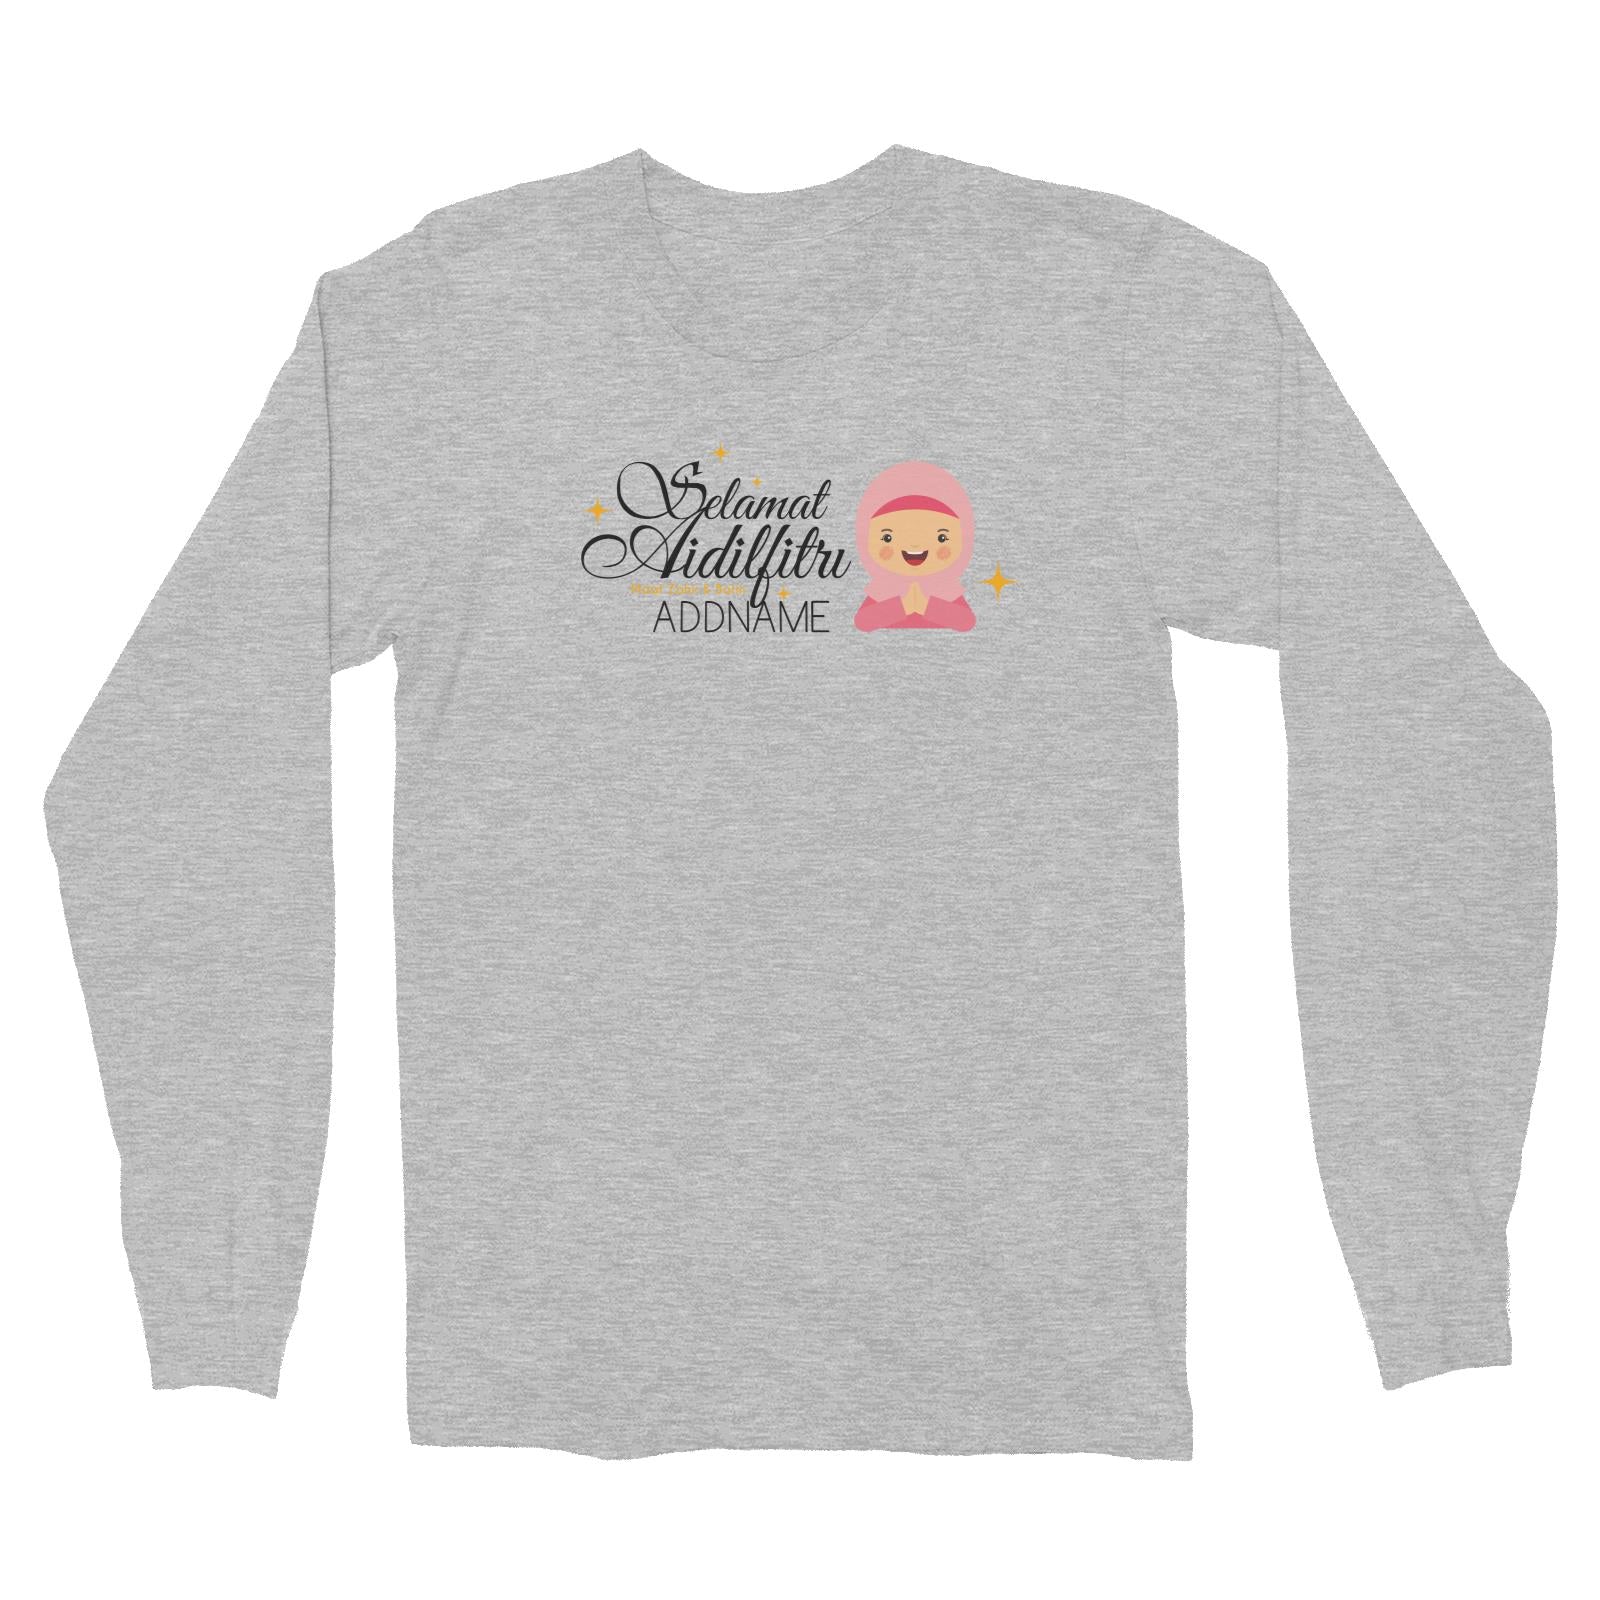 Selamat Aidilfitri Lady Long Sleeve Unisex T-Shirt Raya Personalizable Designs Sweet Character